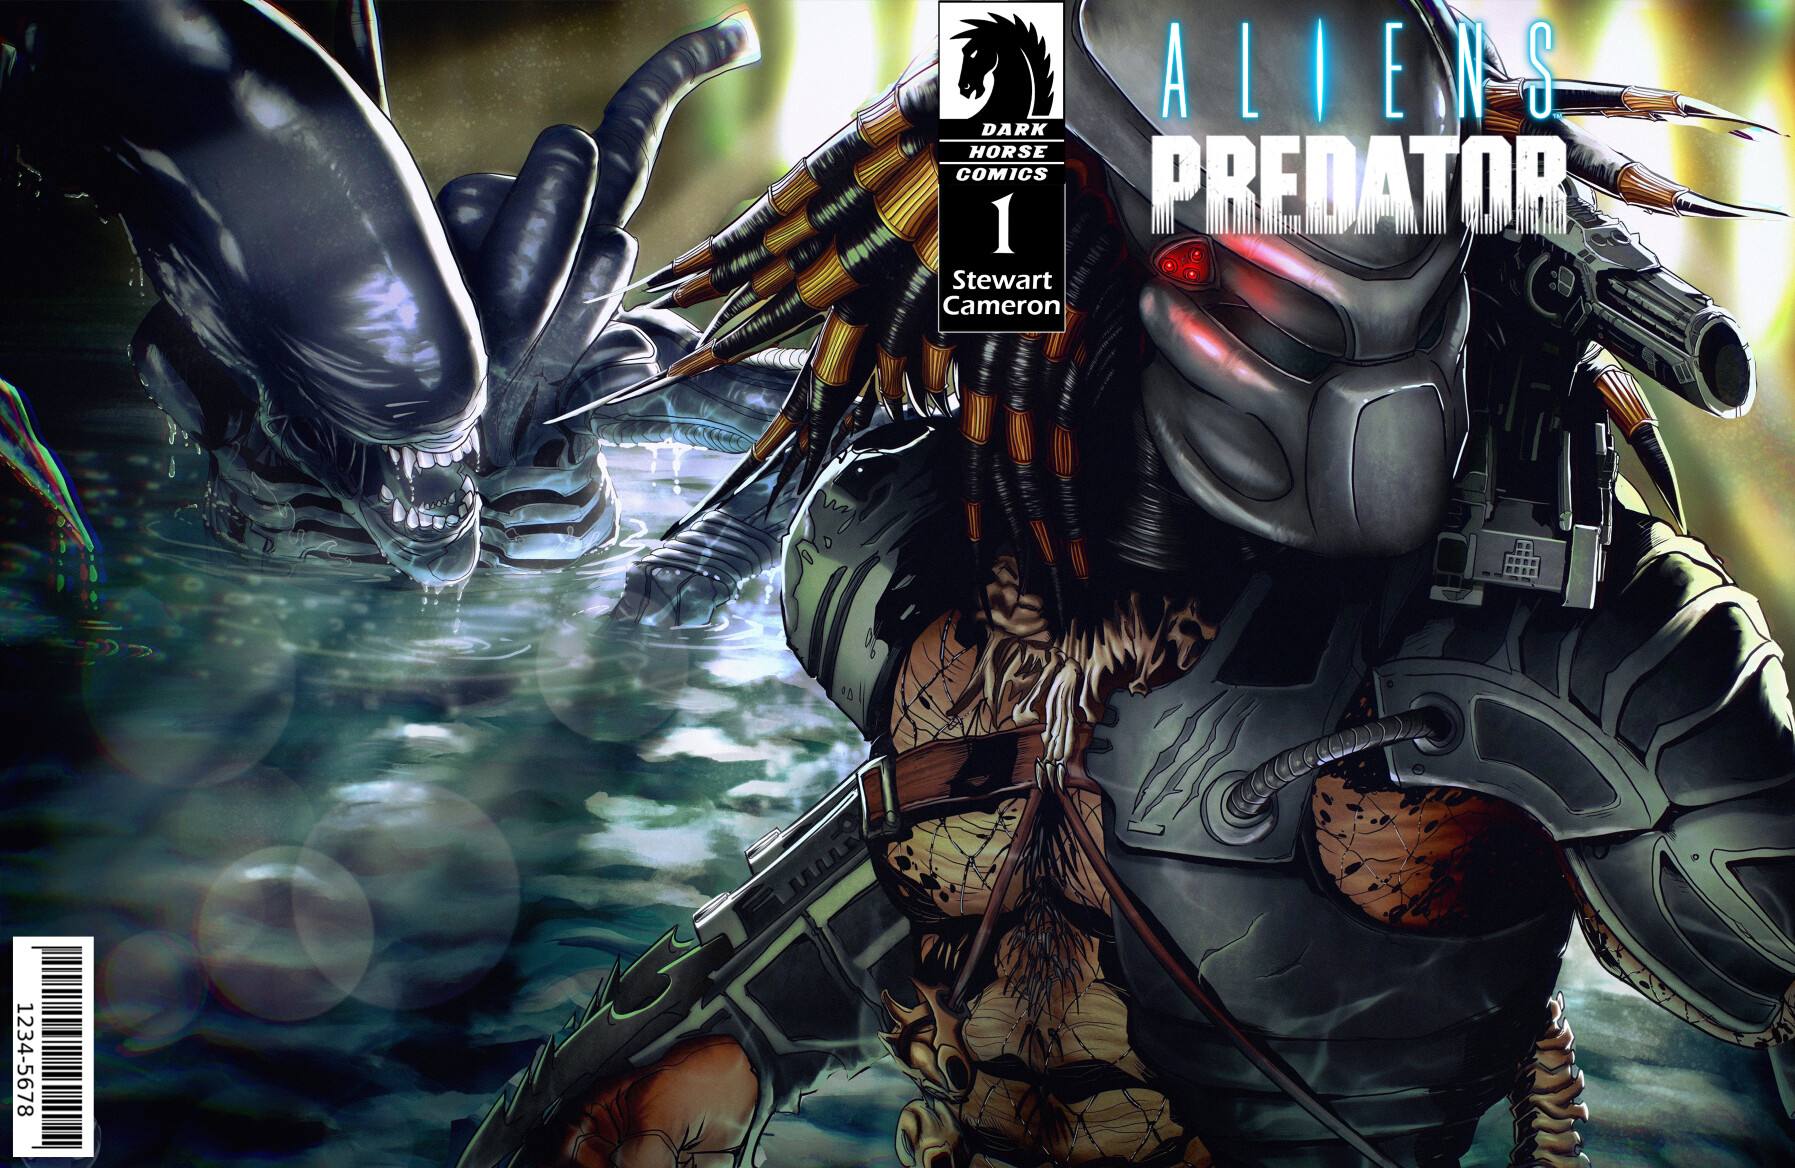 ArtStation - Aliens vs. Predator